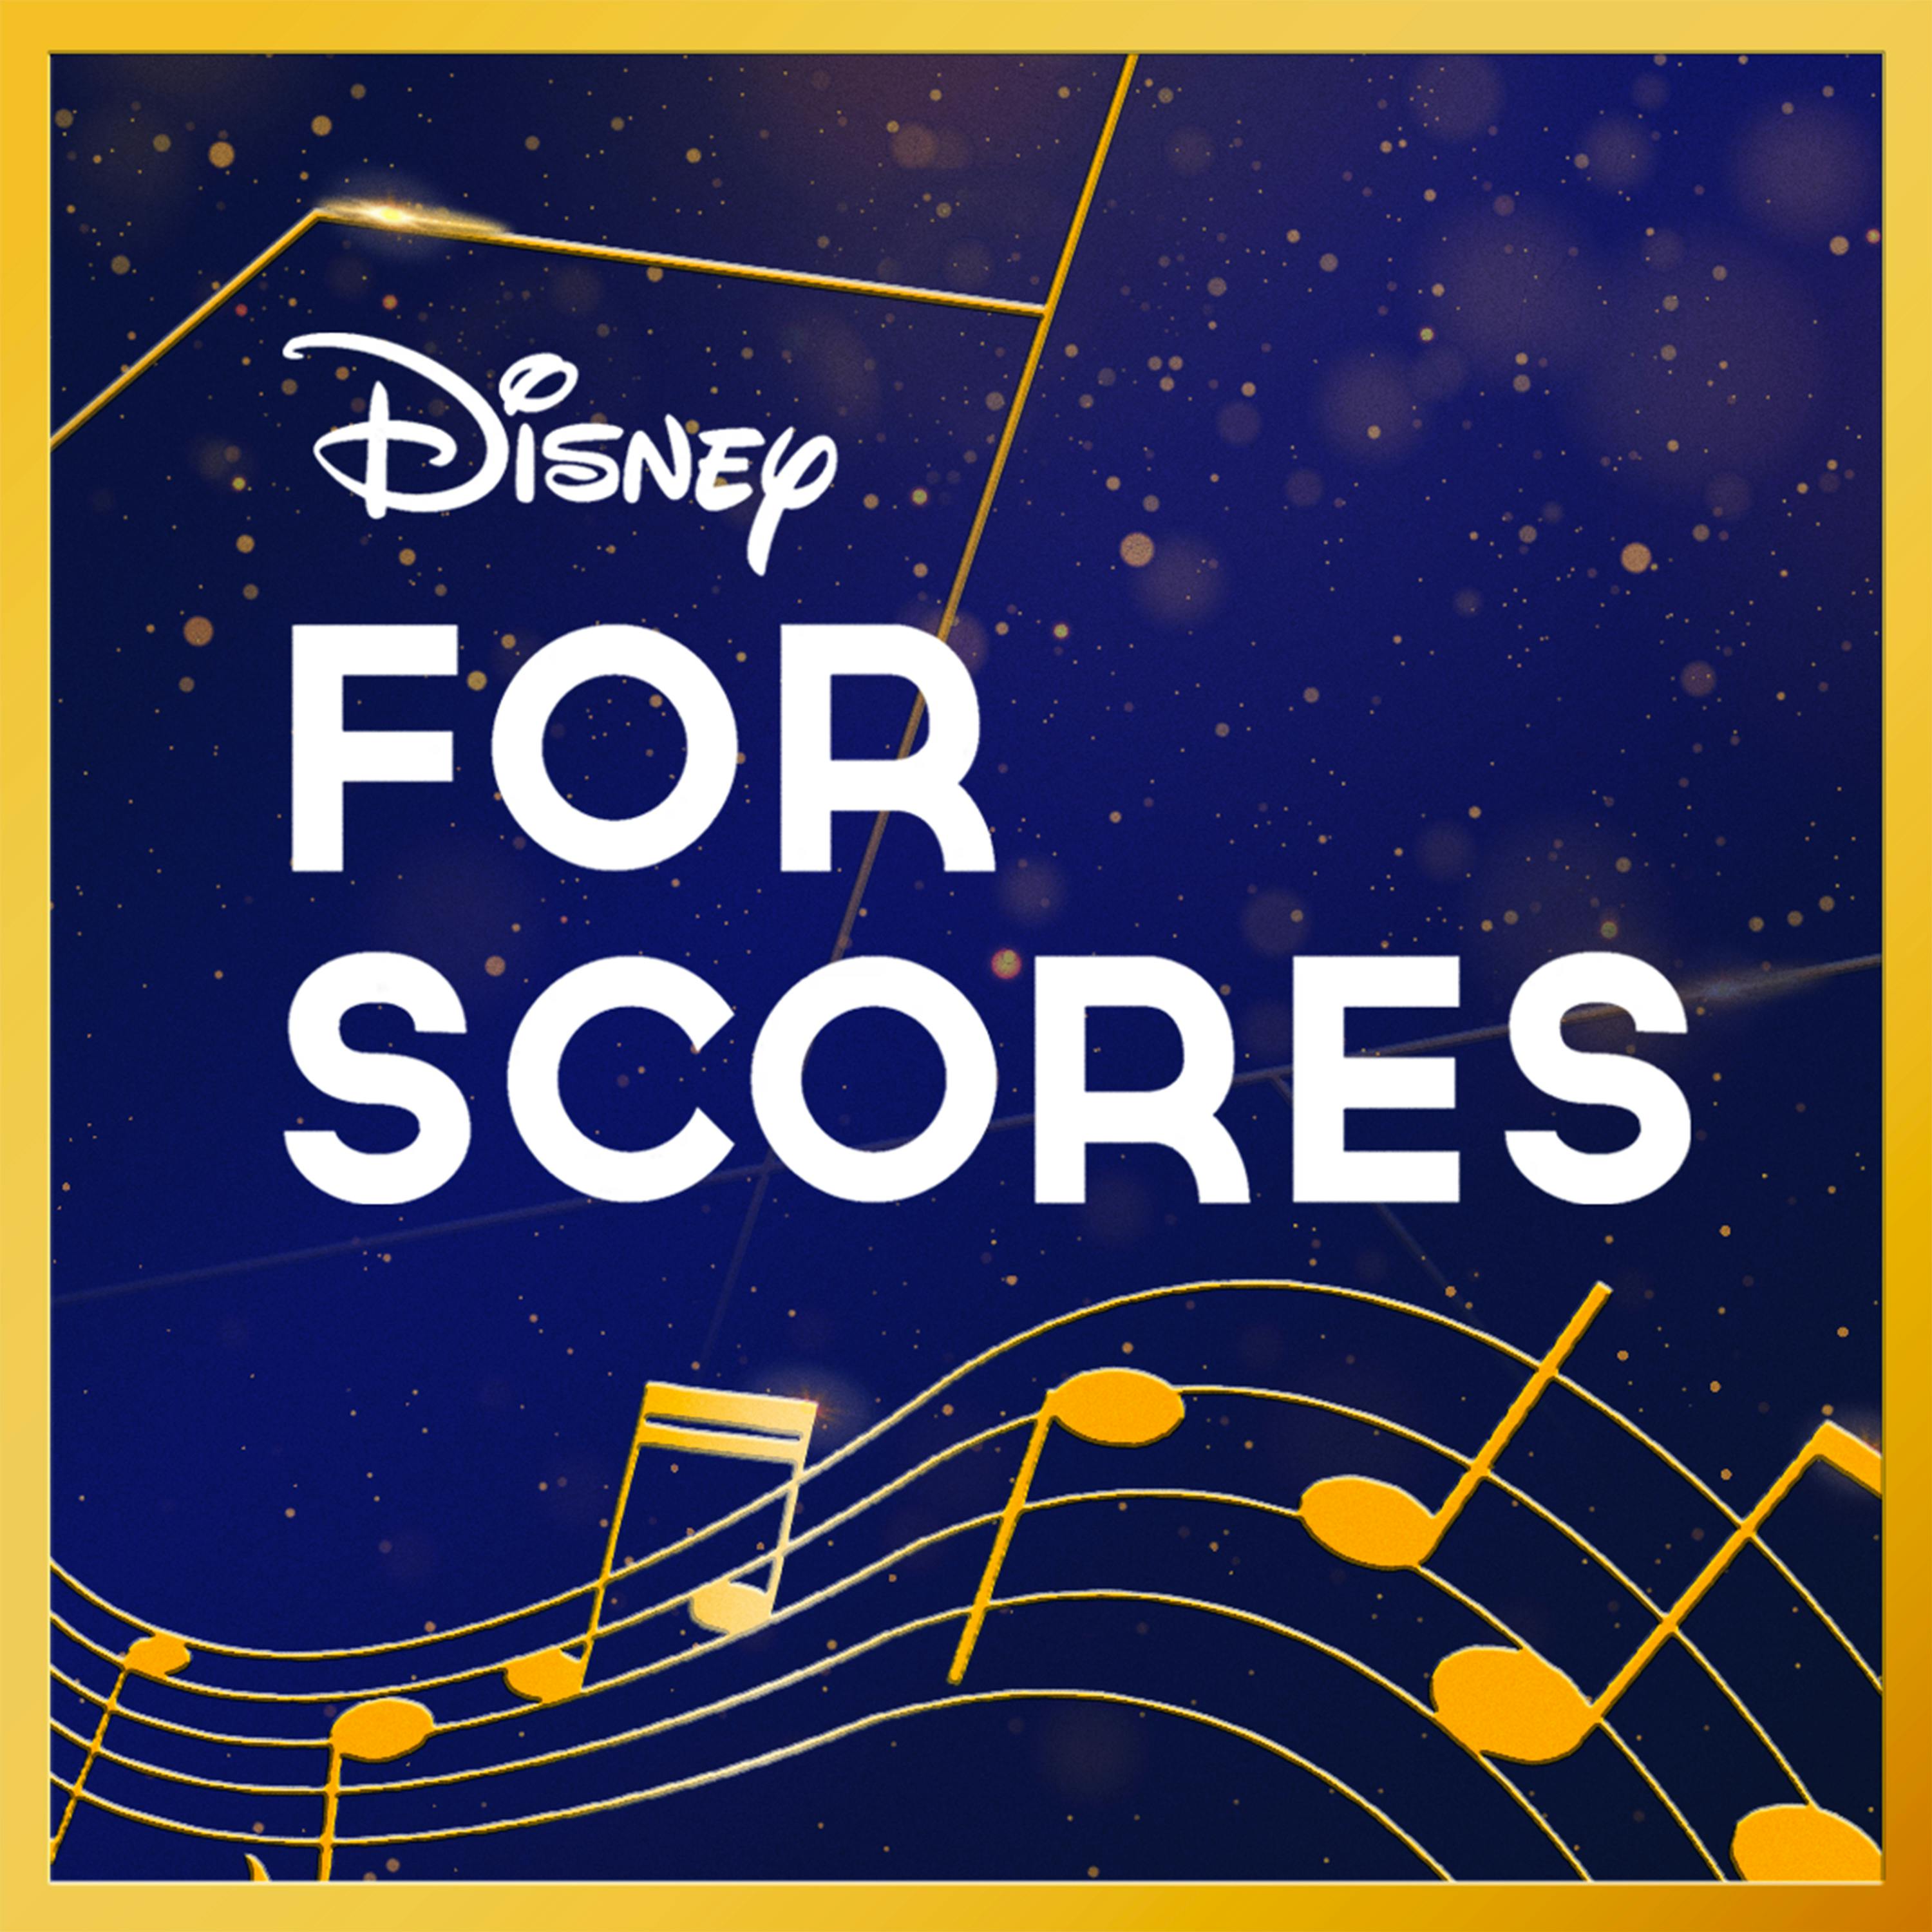 Disney For Scores podcast show image